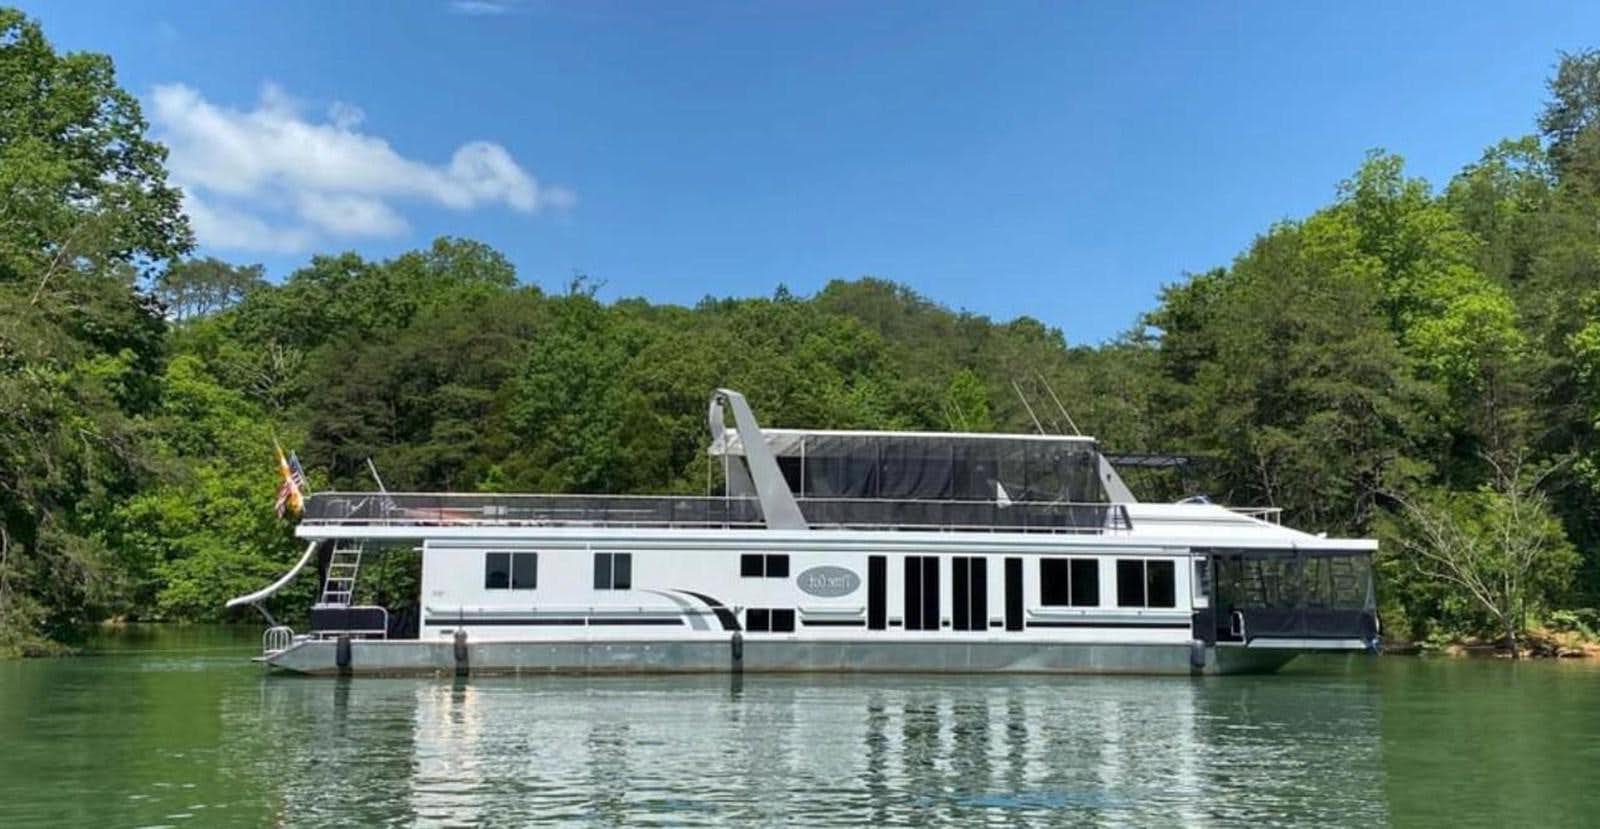 2005 horizon 18x88 houseboat
Yacht for Sale